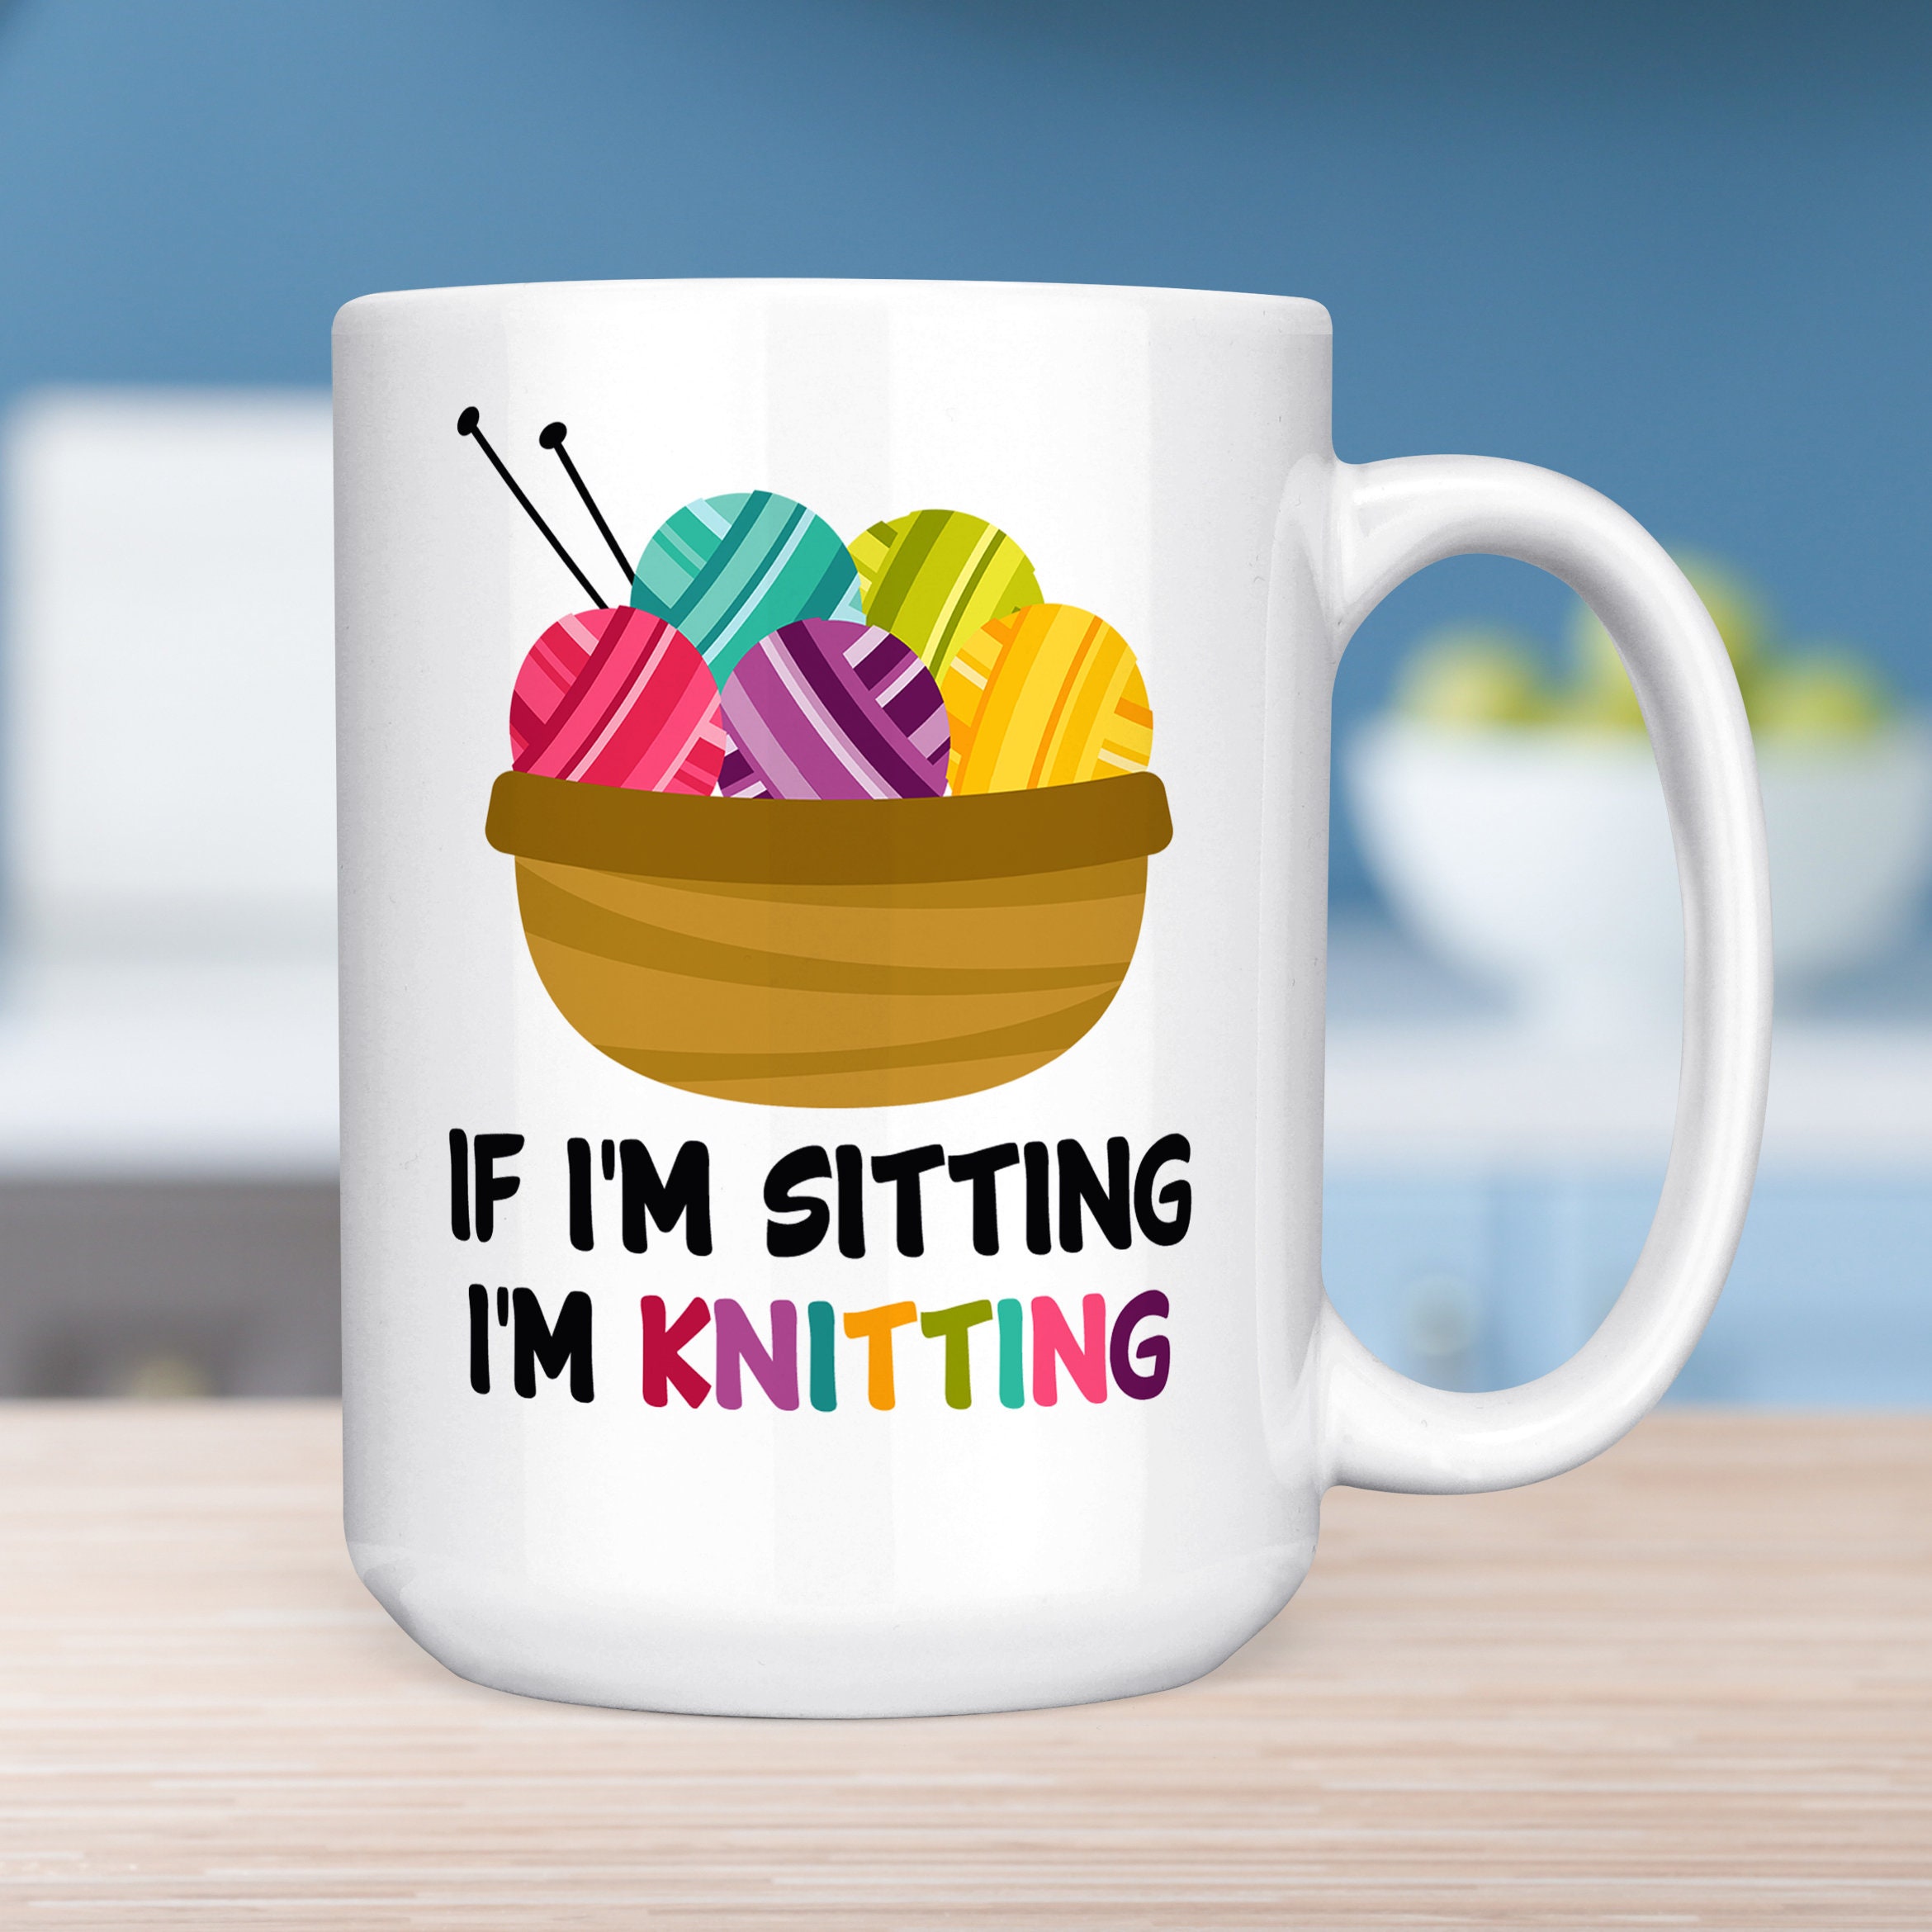 Burn Off The Crazy Custom Knitting Mug Knit Mug Crazy Mug Knitting Gifts Crazy Knitting Mug Coffee Knitting Mug Knitting Mug